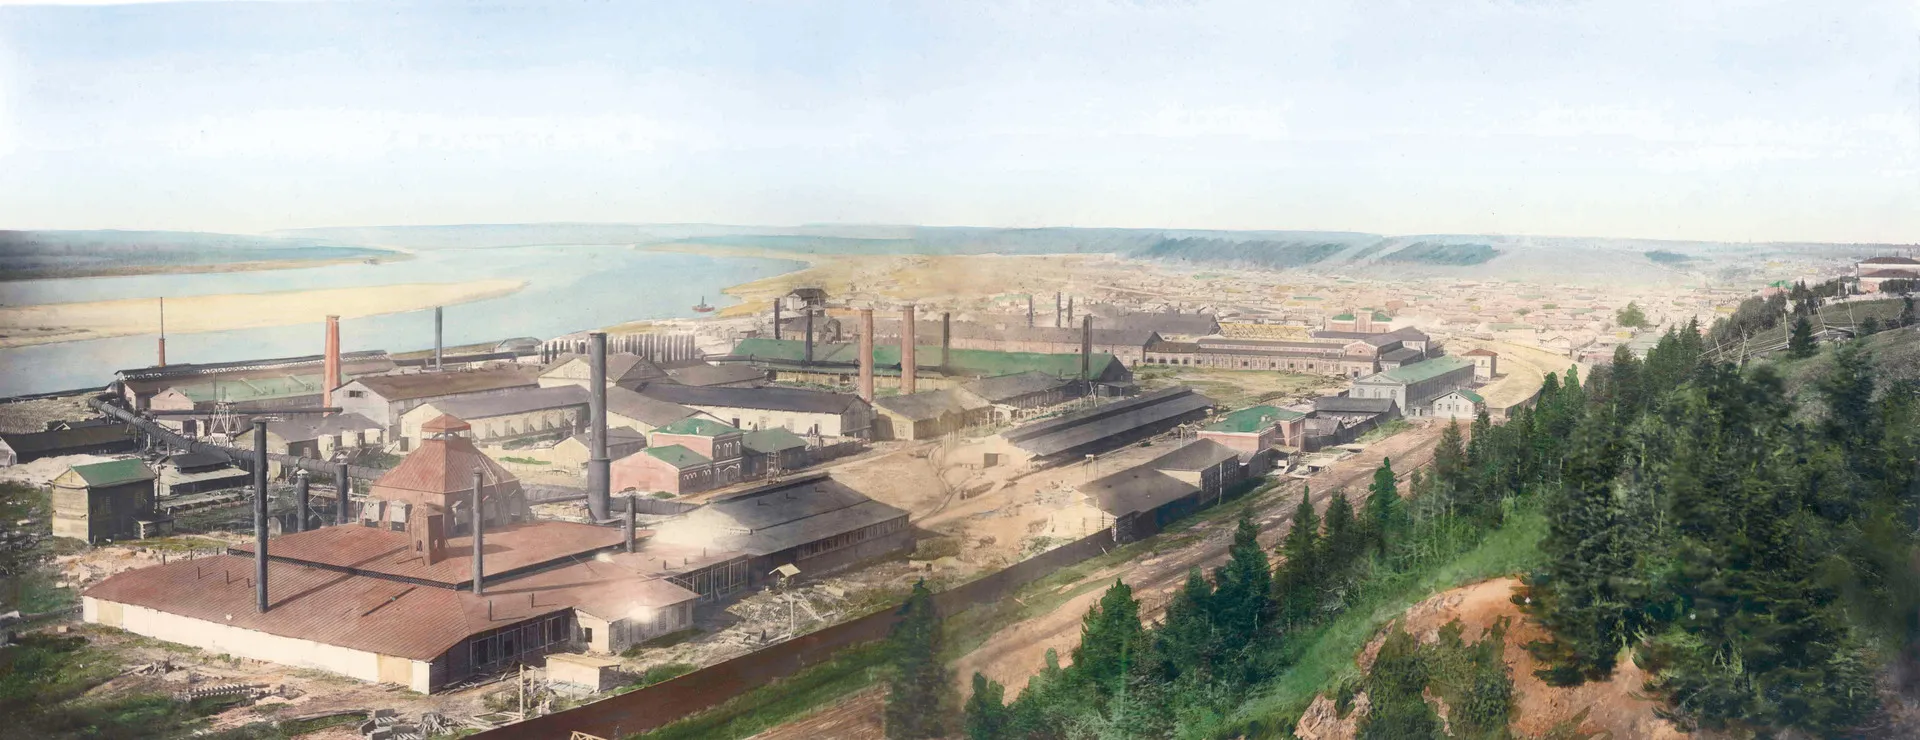 Мотовилихинский завод, вторая половина XIX в. / The Motovilihinsky Plant, second half of XIX century